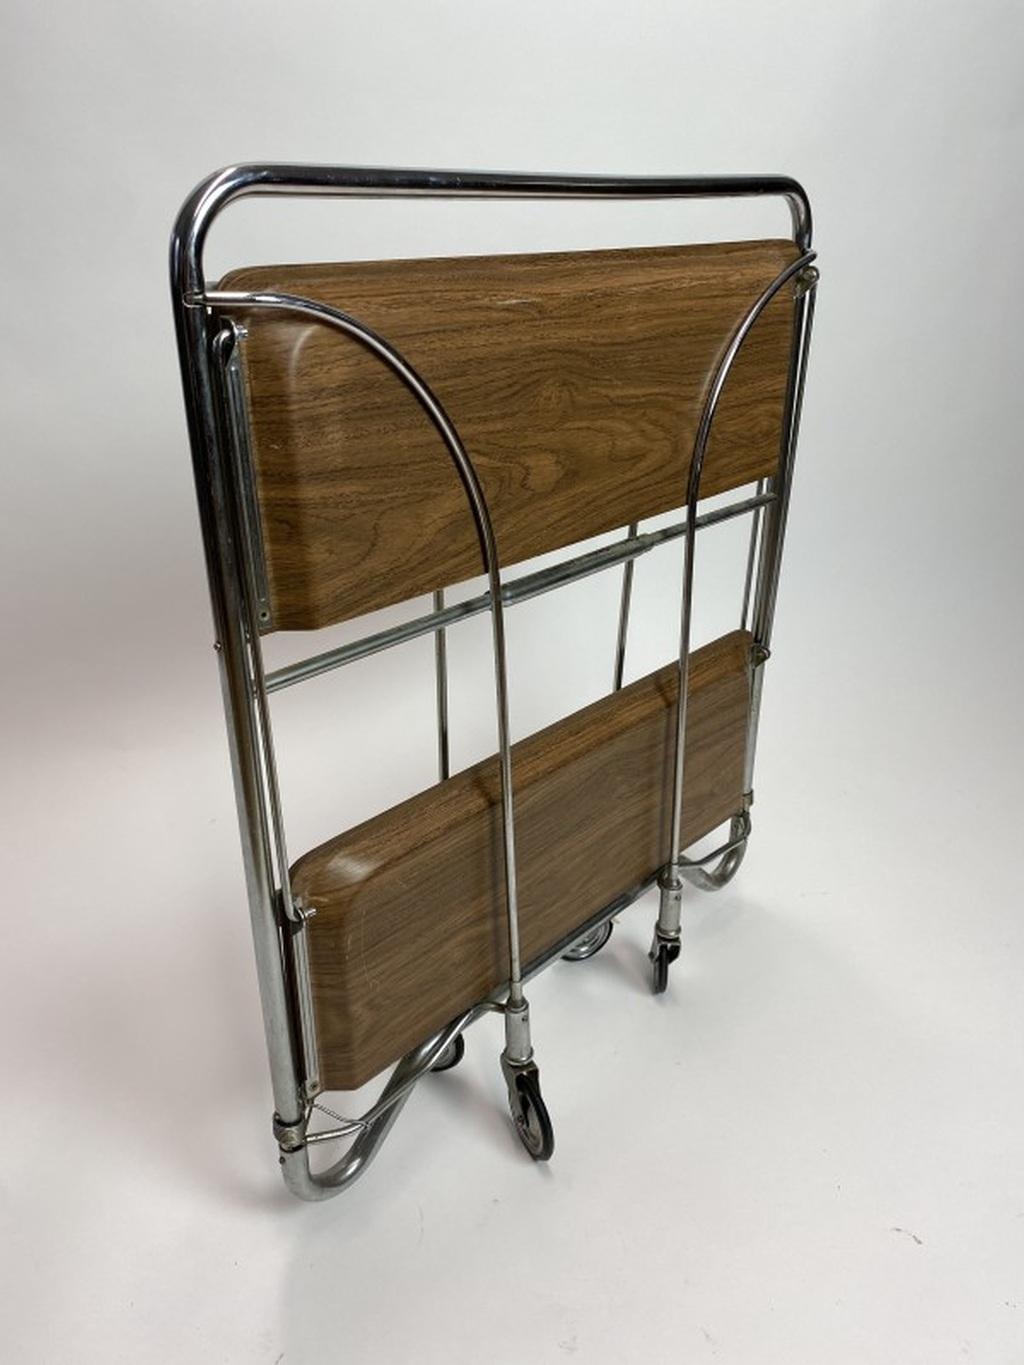 Vintage folding serving trolley in excellent original condition.